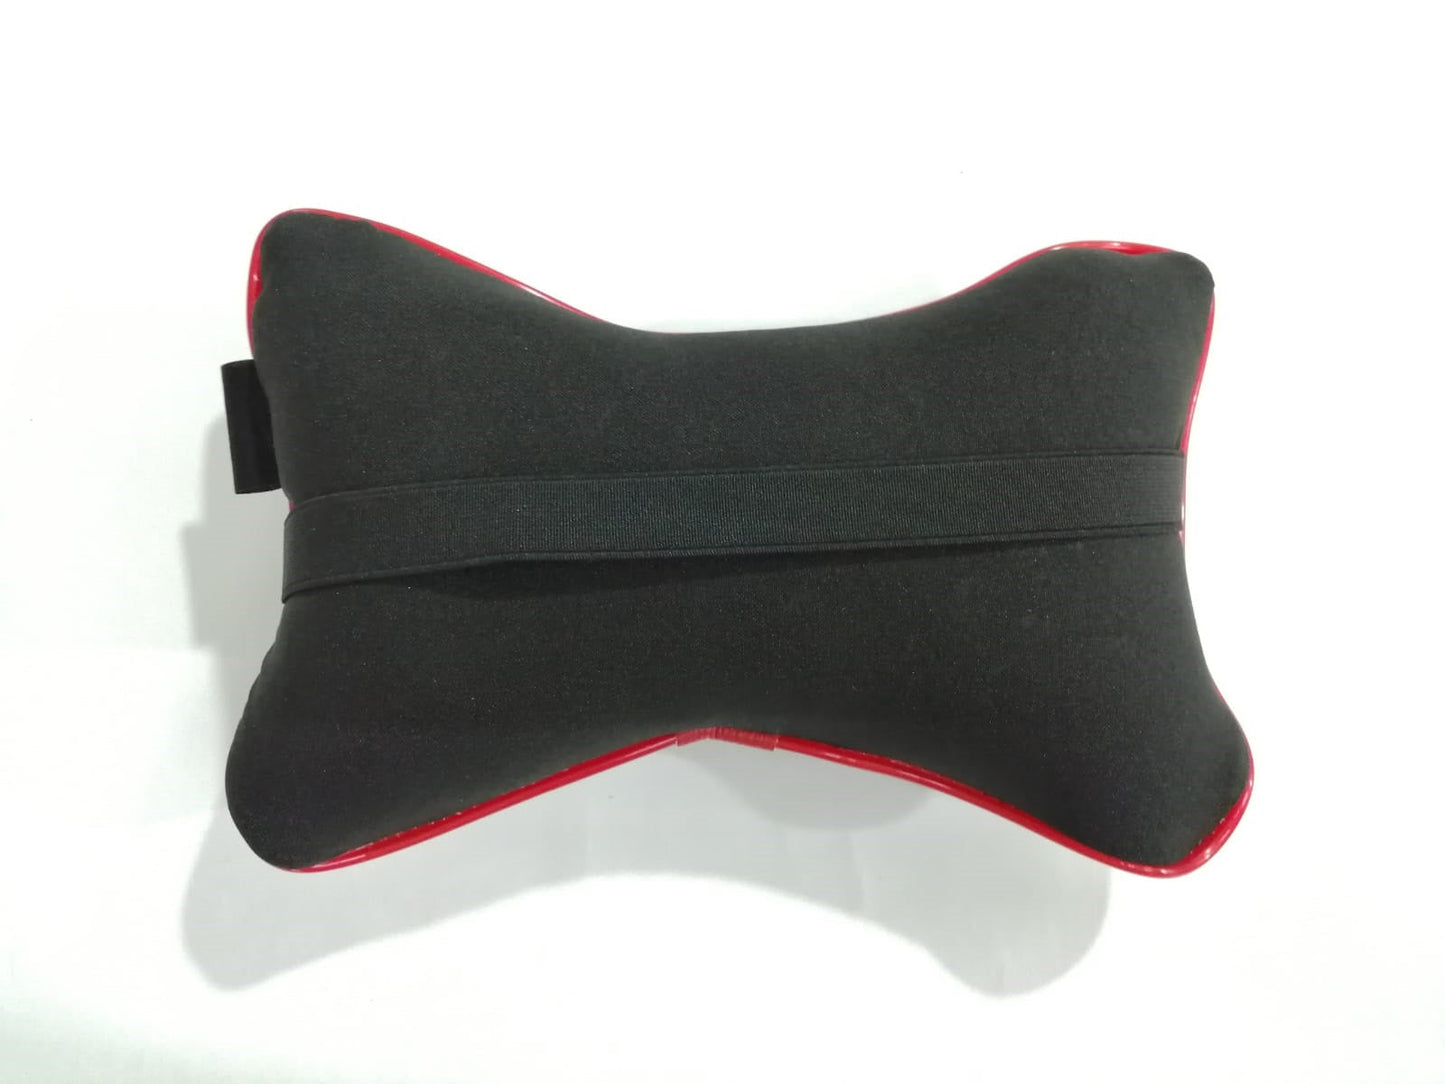 2x Audi s line car headrest Neck pillow Cushion